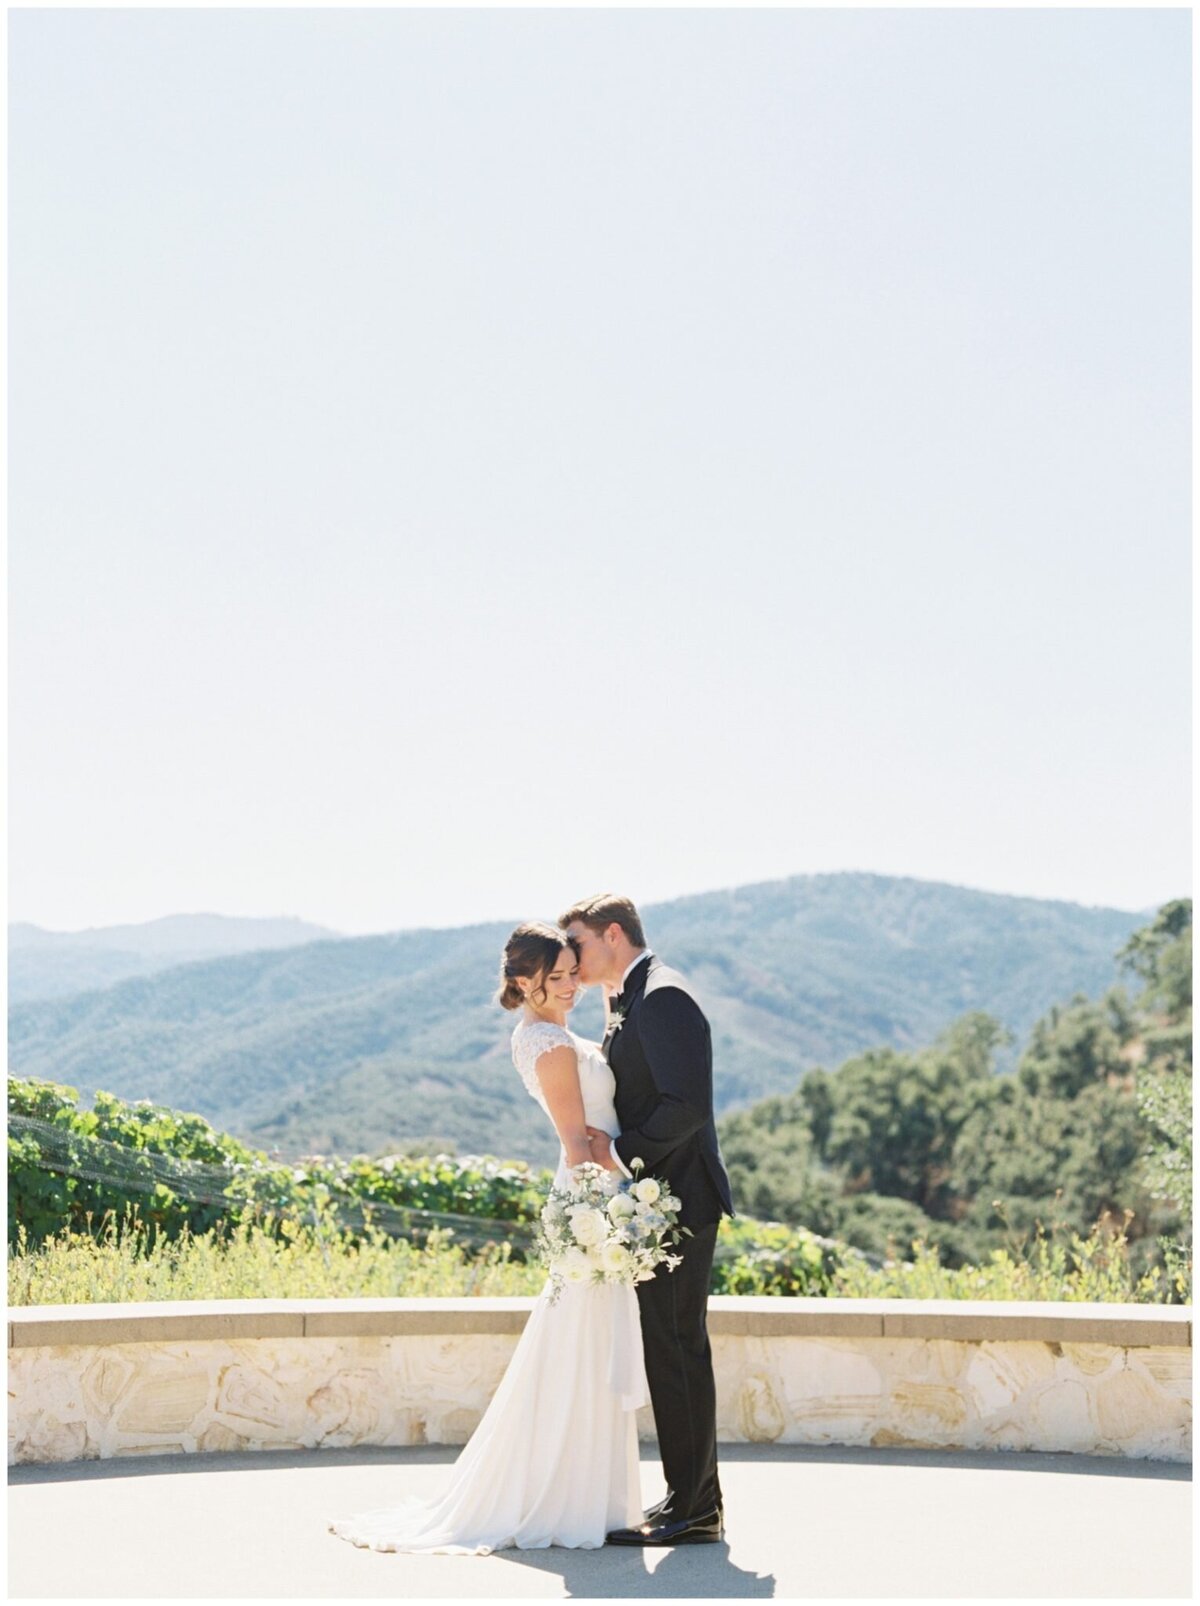 Katie-Jordan-Carmel-Valley-Holman-Ranch-Wedding-Cassie-Valente-Photography-0156-1530x2048